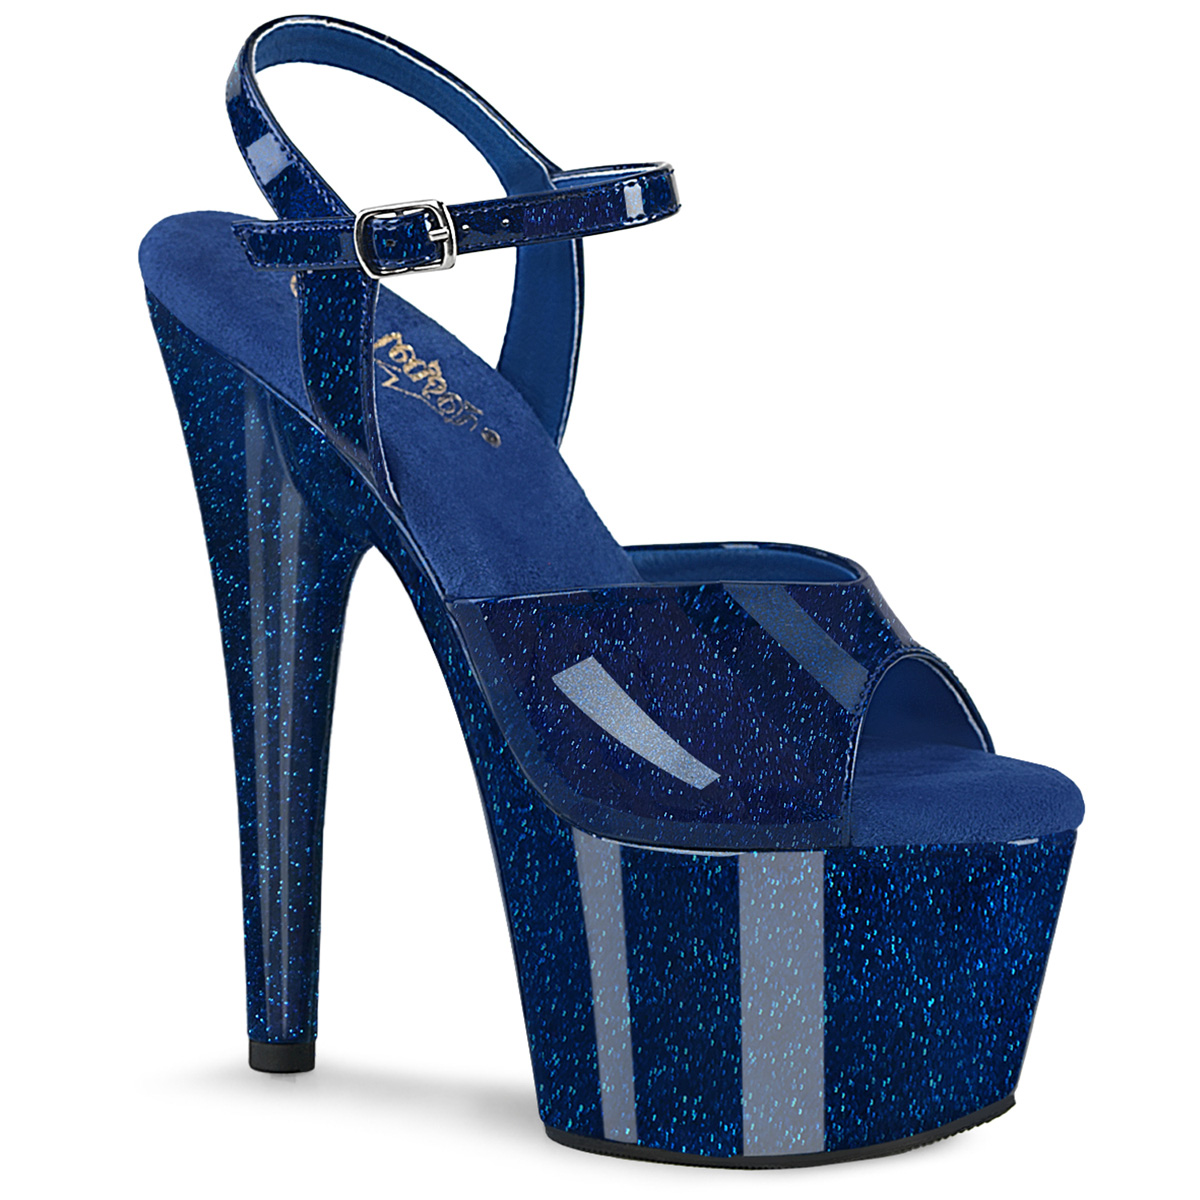 John Galliano | Shoes | John Galliano Blue Glitter Heels 37 2 New | Poshmark